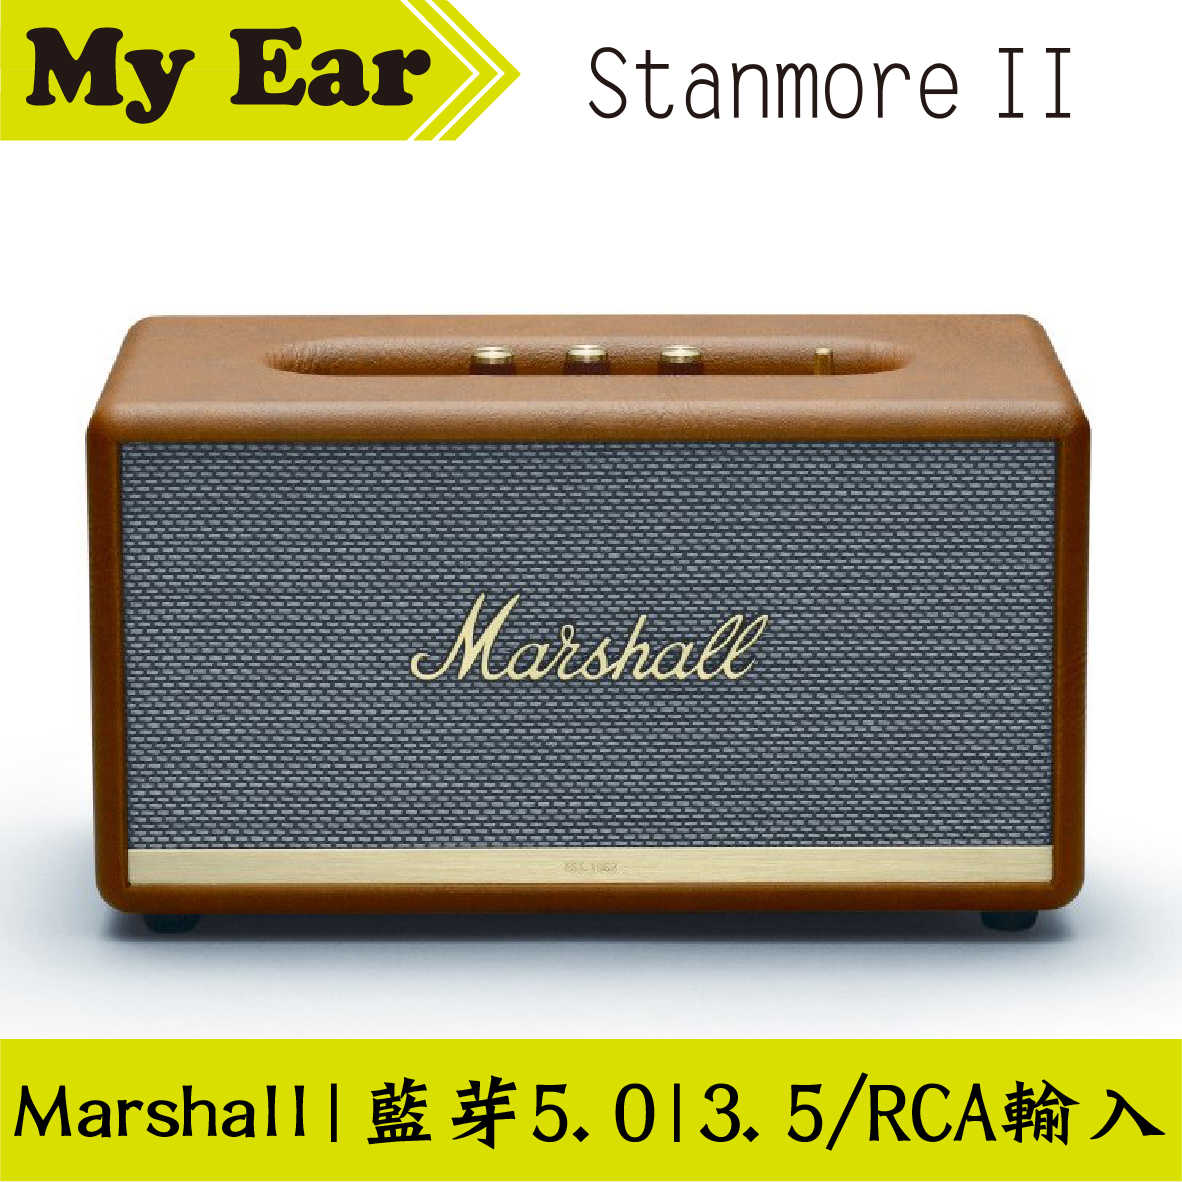 Marshall Stanmore II 二代 藍芽 喇叭 音響 經典黑 | My Ear耳機專門店